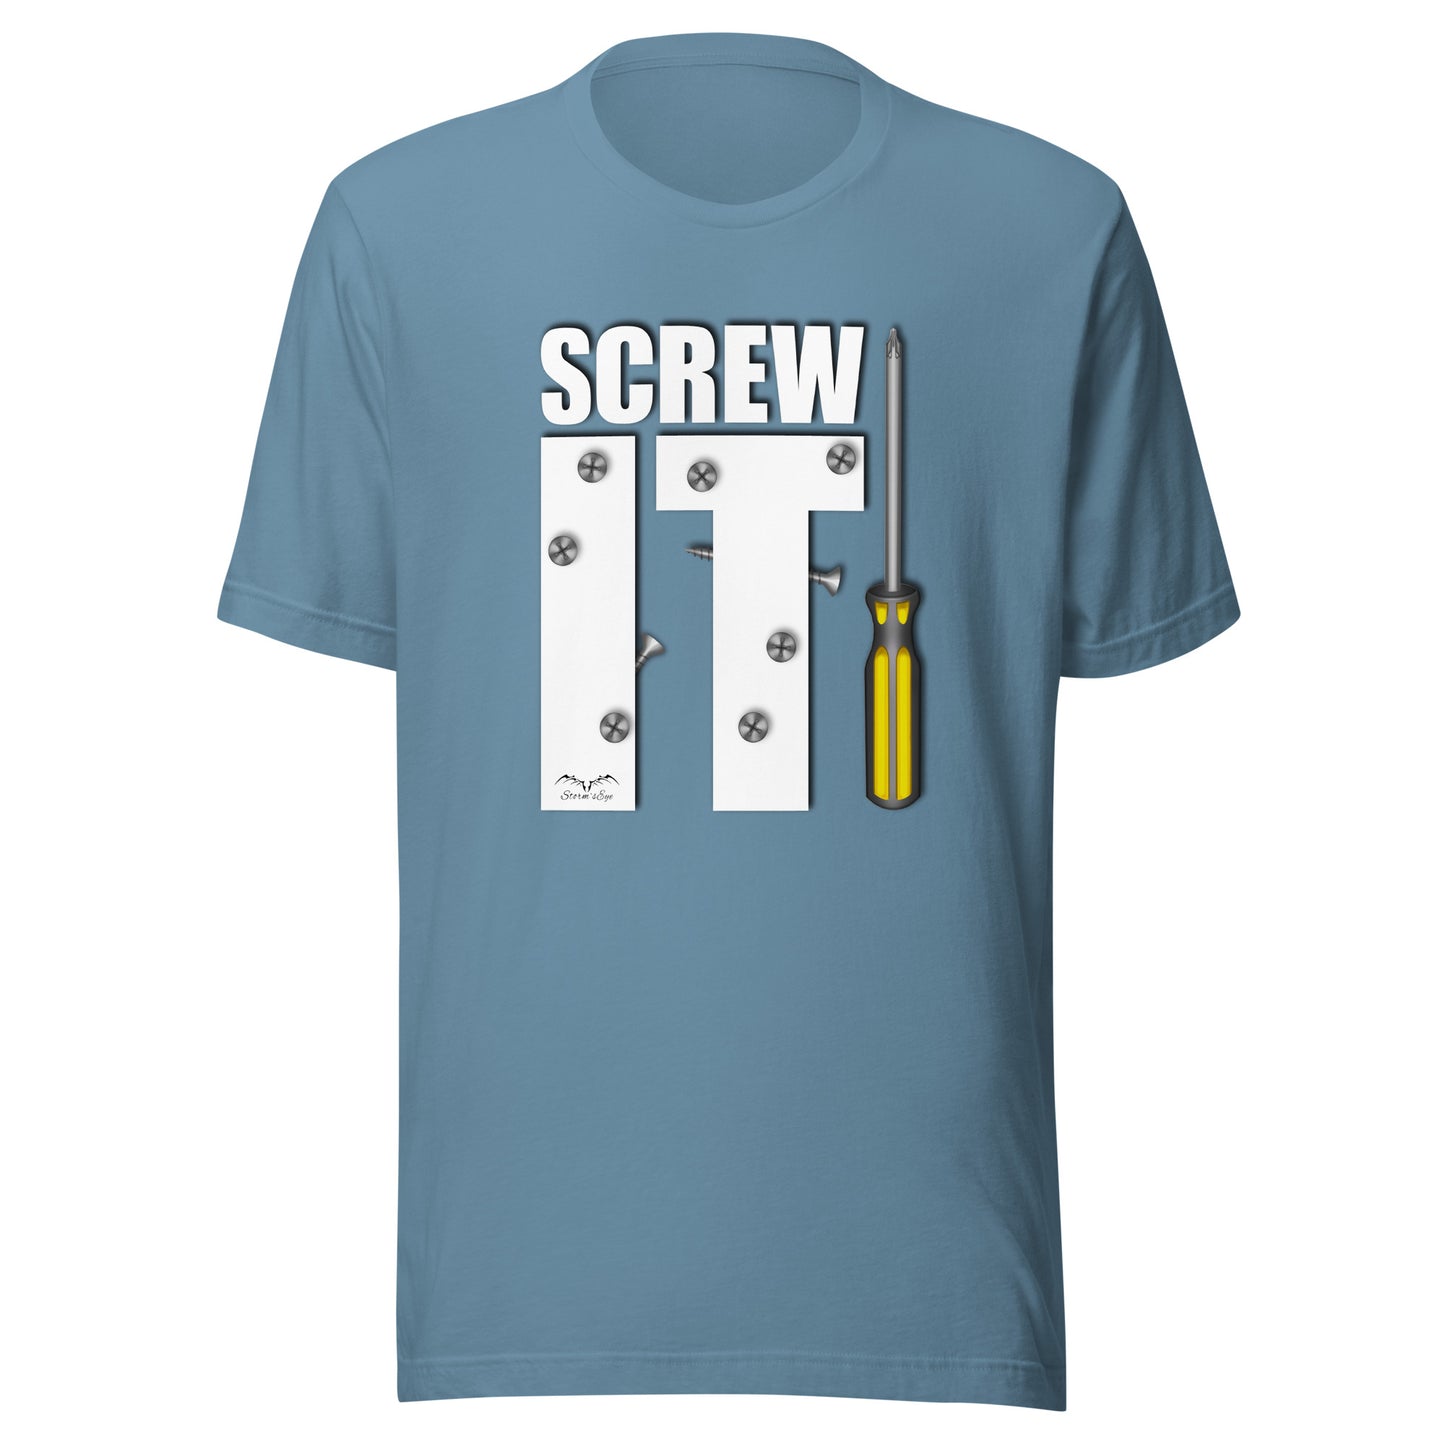 screw it DIY t-shirt blue, by Stormseye Design